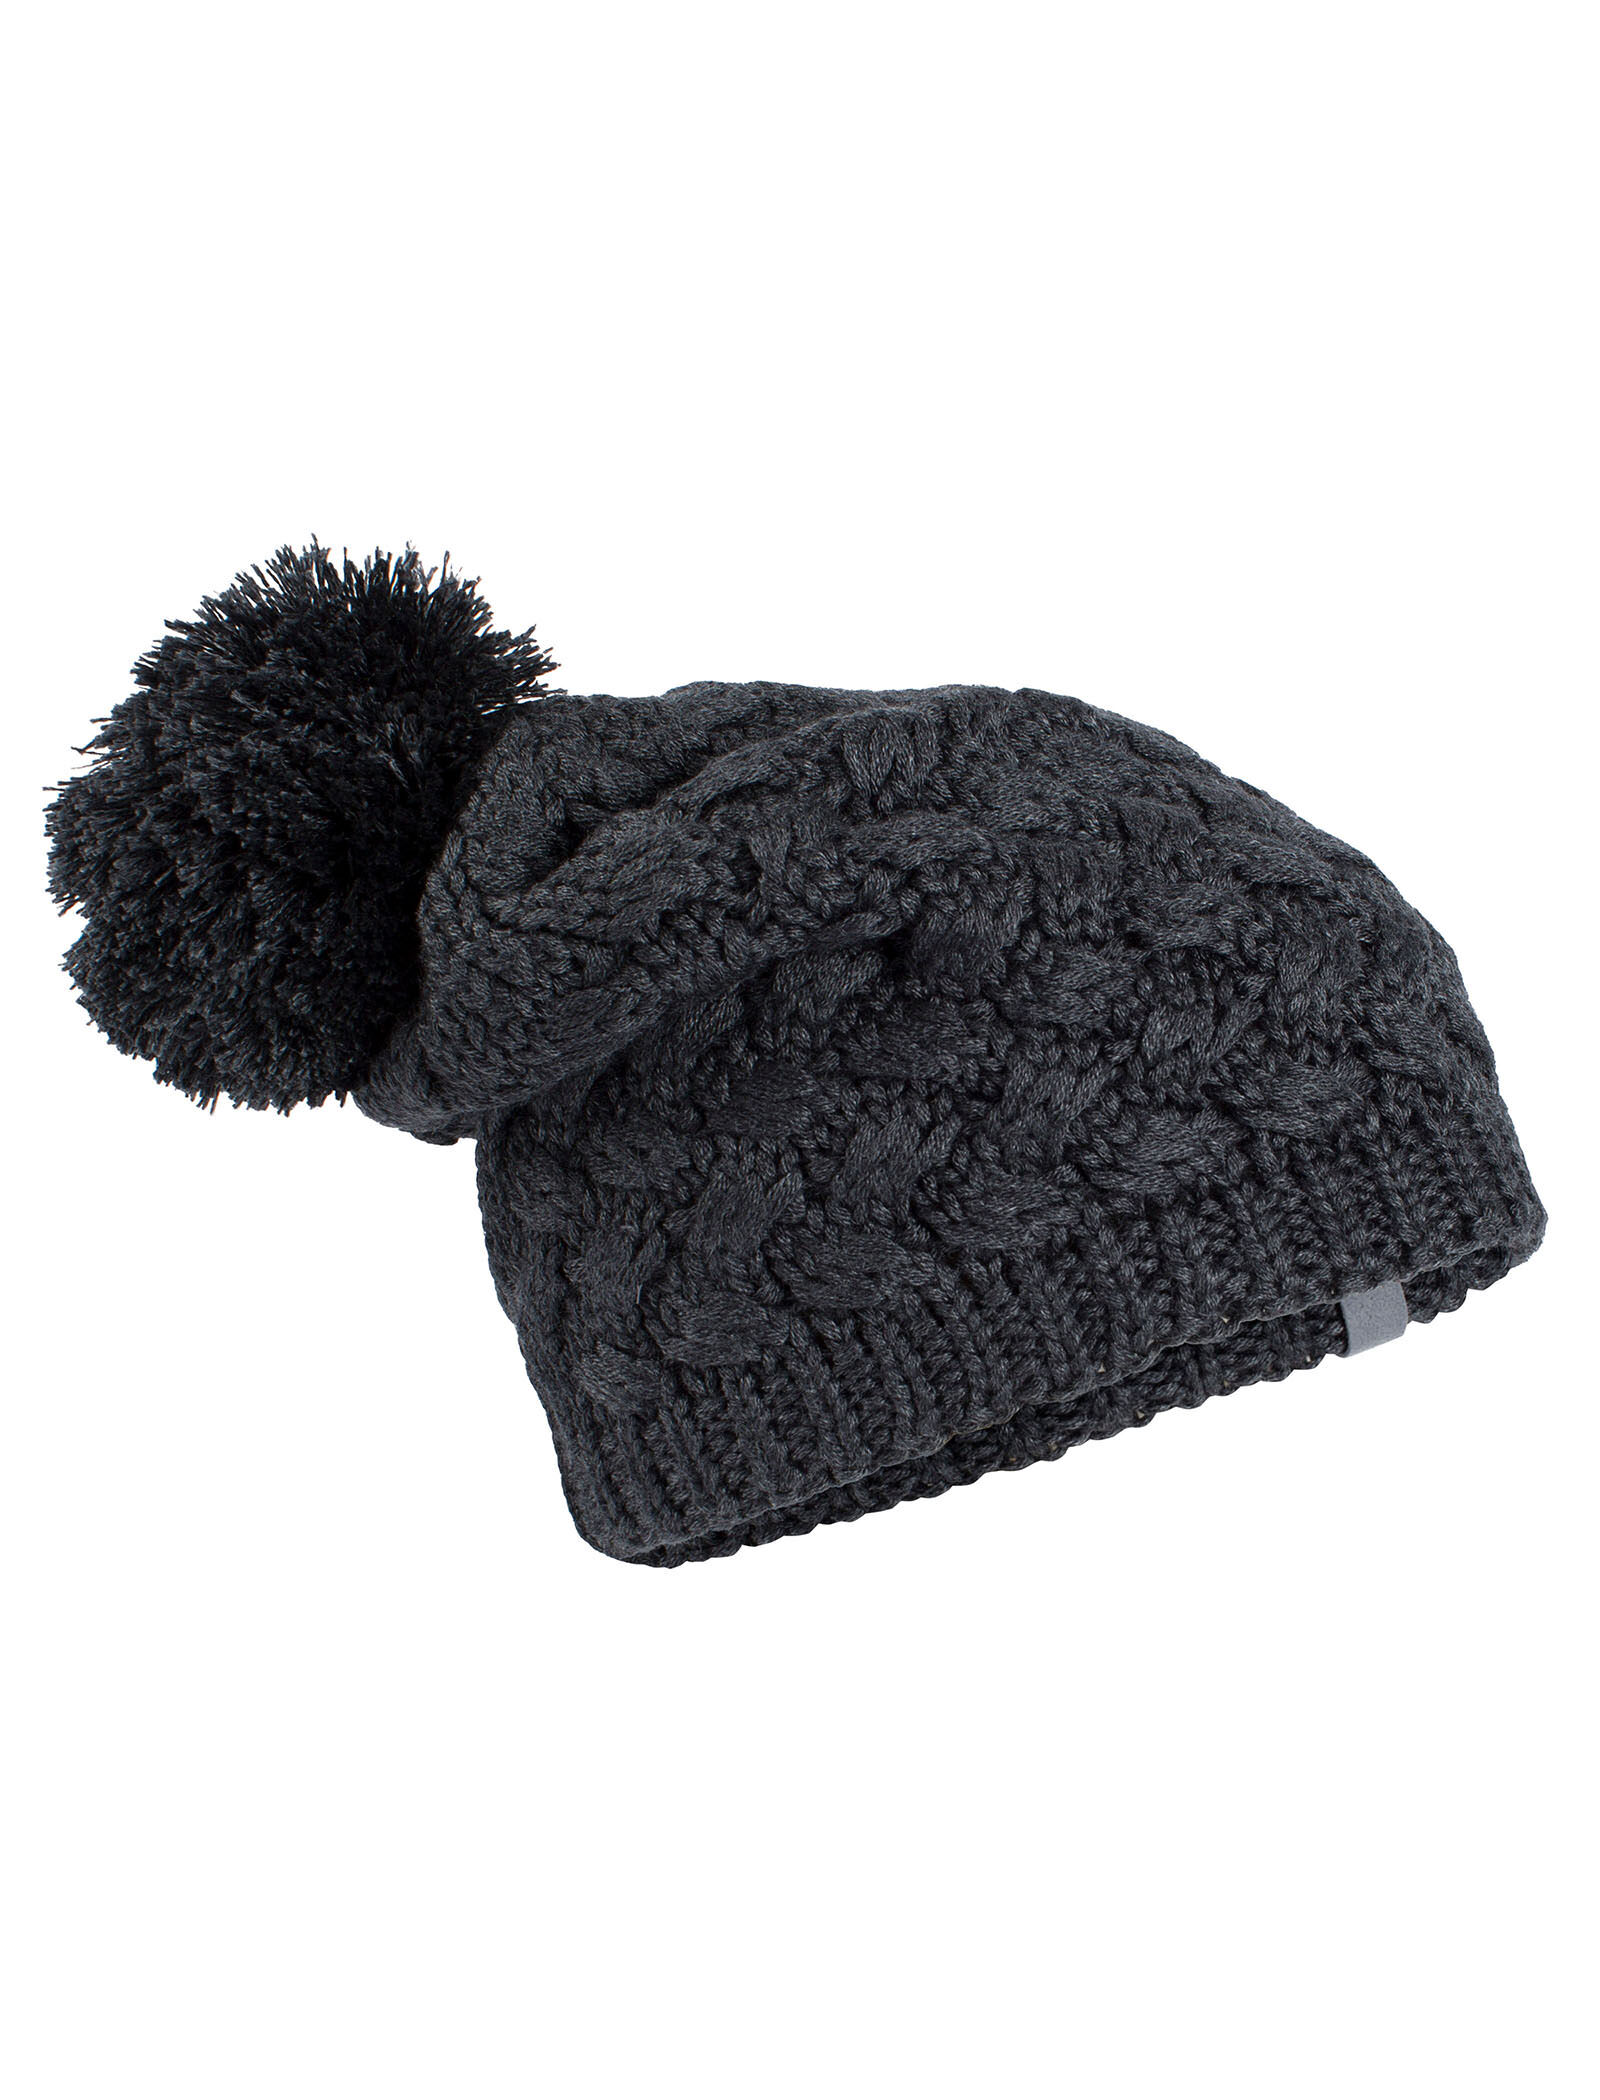 One size Icebreaker Merino Zone Beanie Cold-Weather-Hats Black